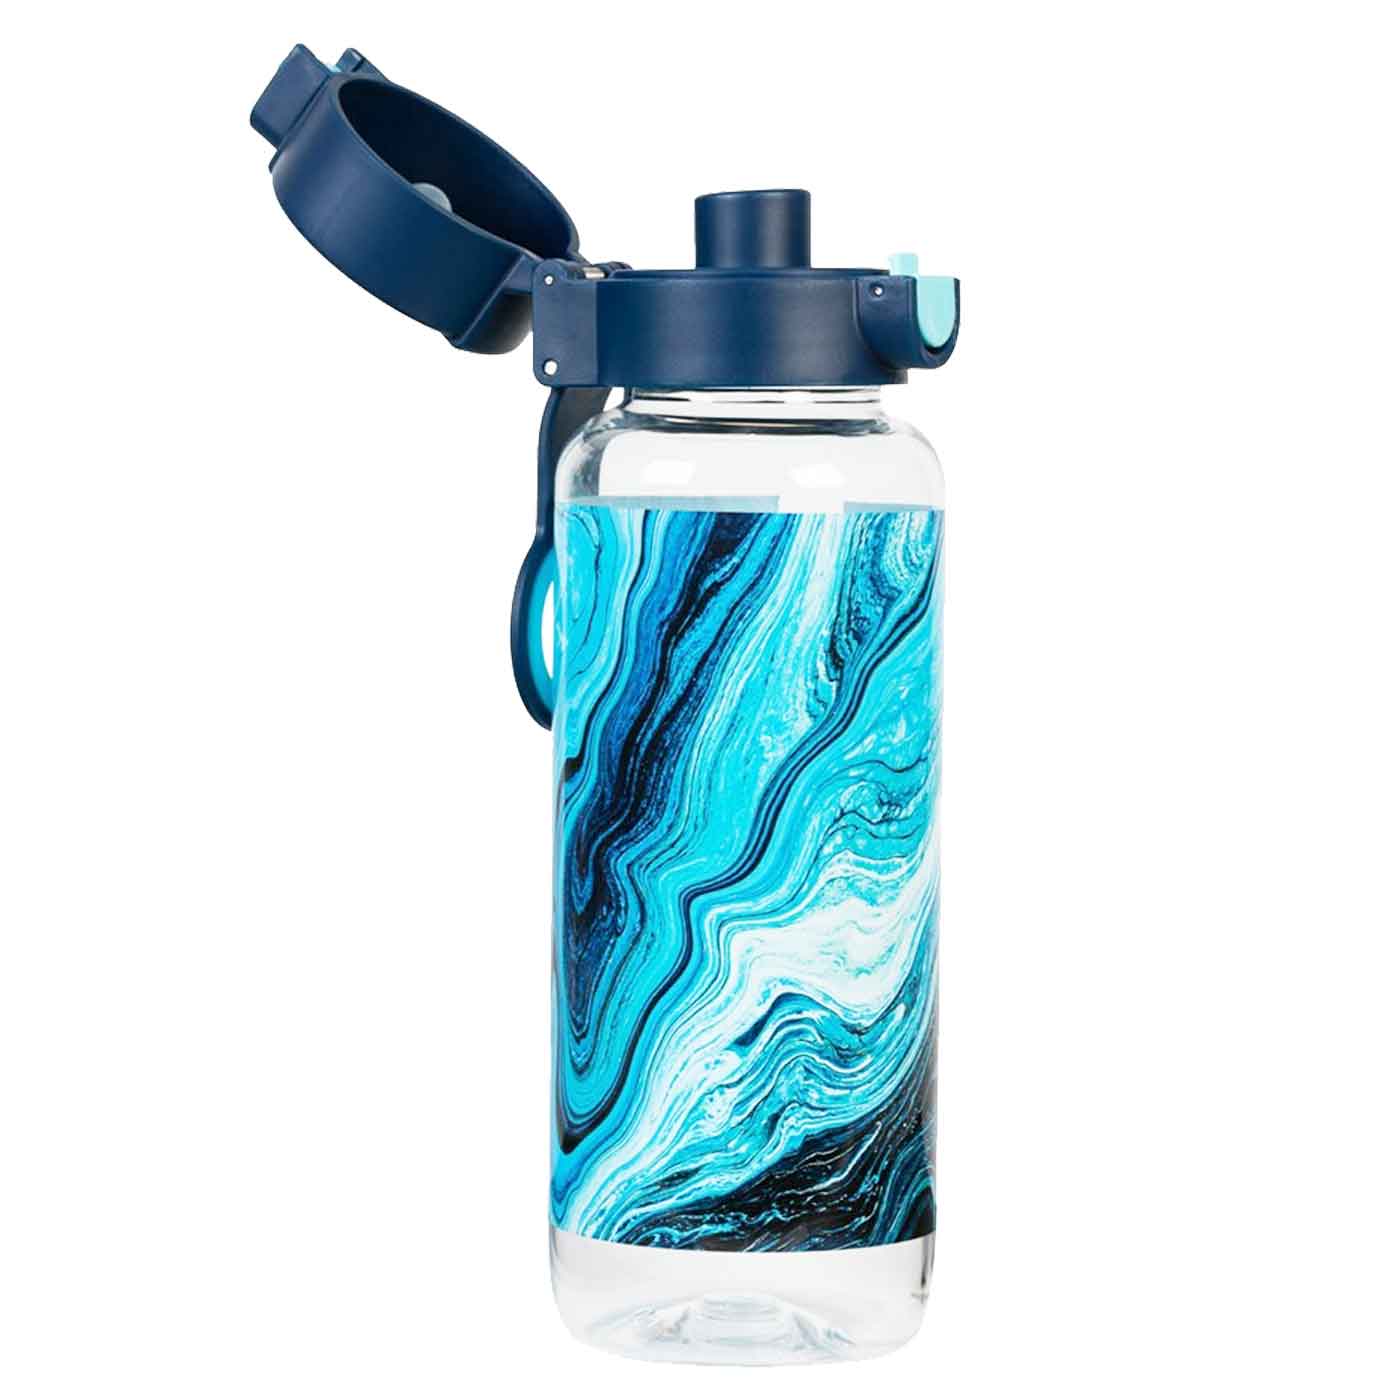 Spencil Spill-Proof Water Bottle 650ml Ocean Marble